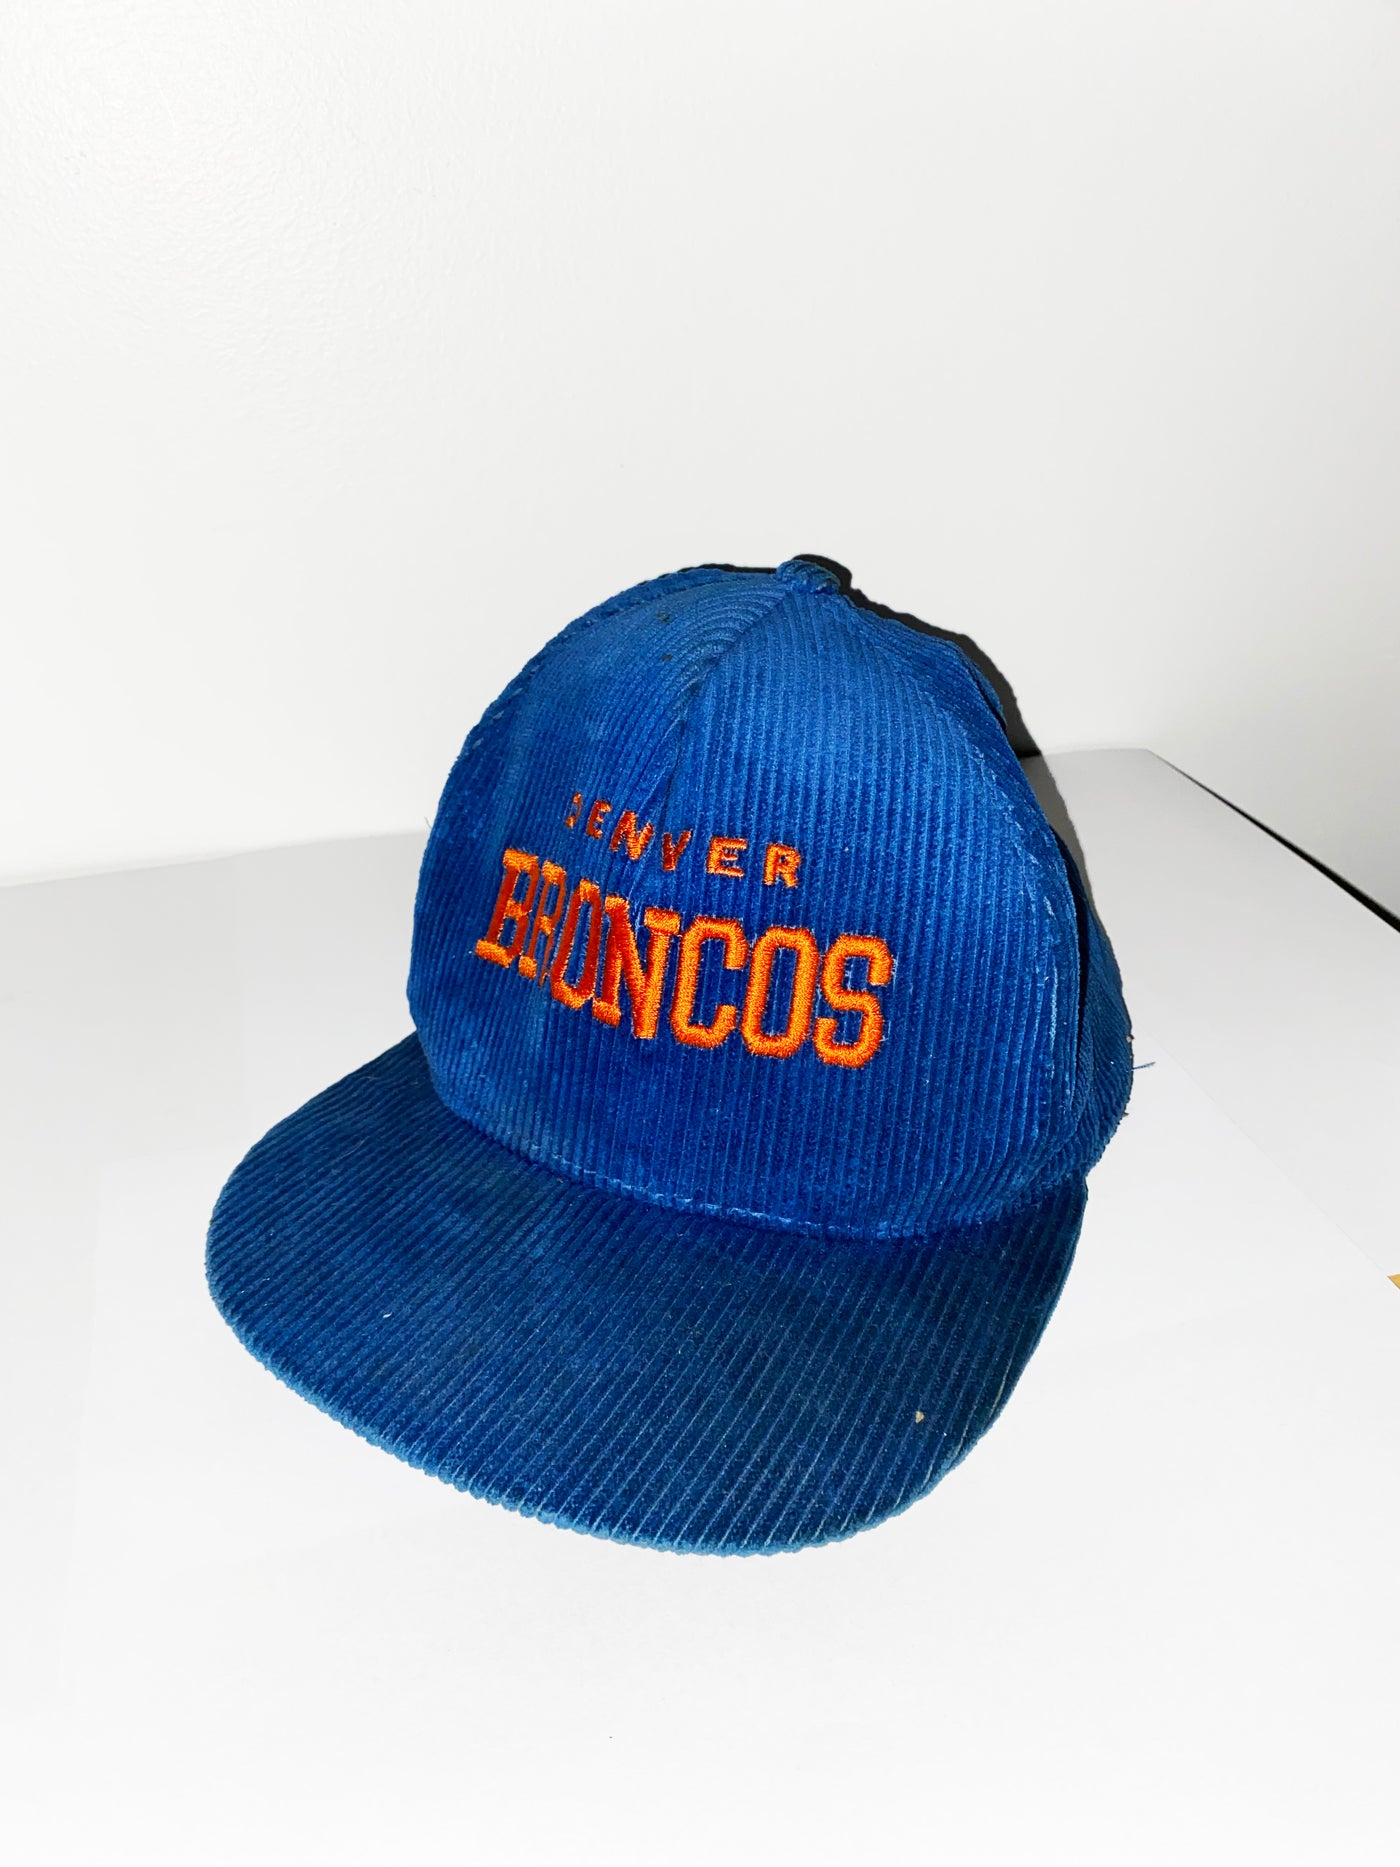 Vintage Denver Broncos Corduroy Snapback